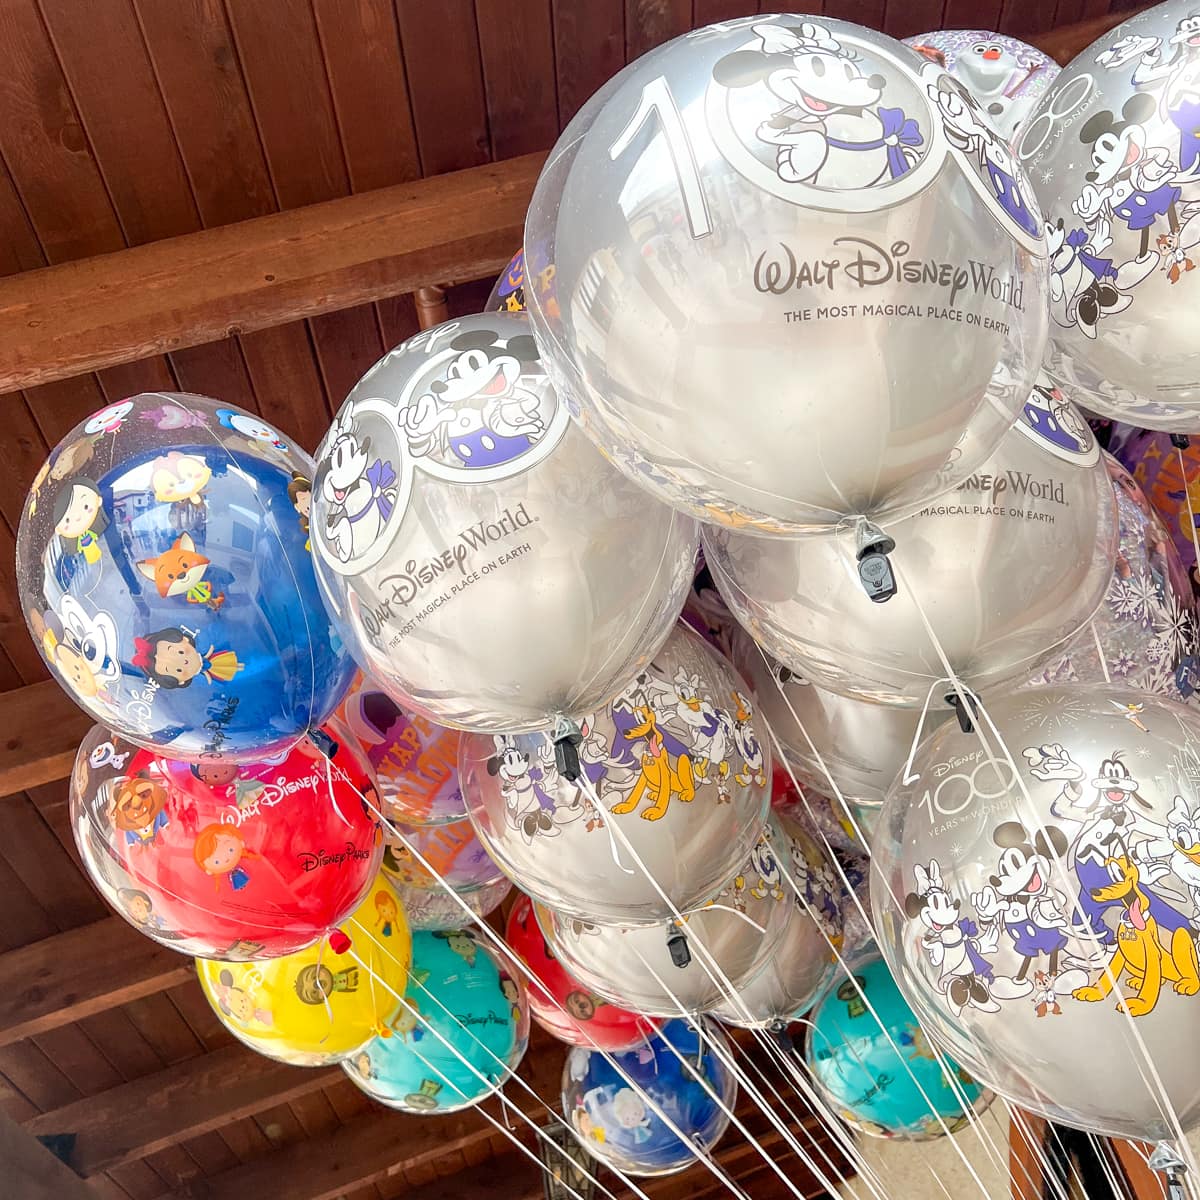 Disney balloons for sale at Disney Springs 